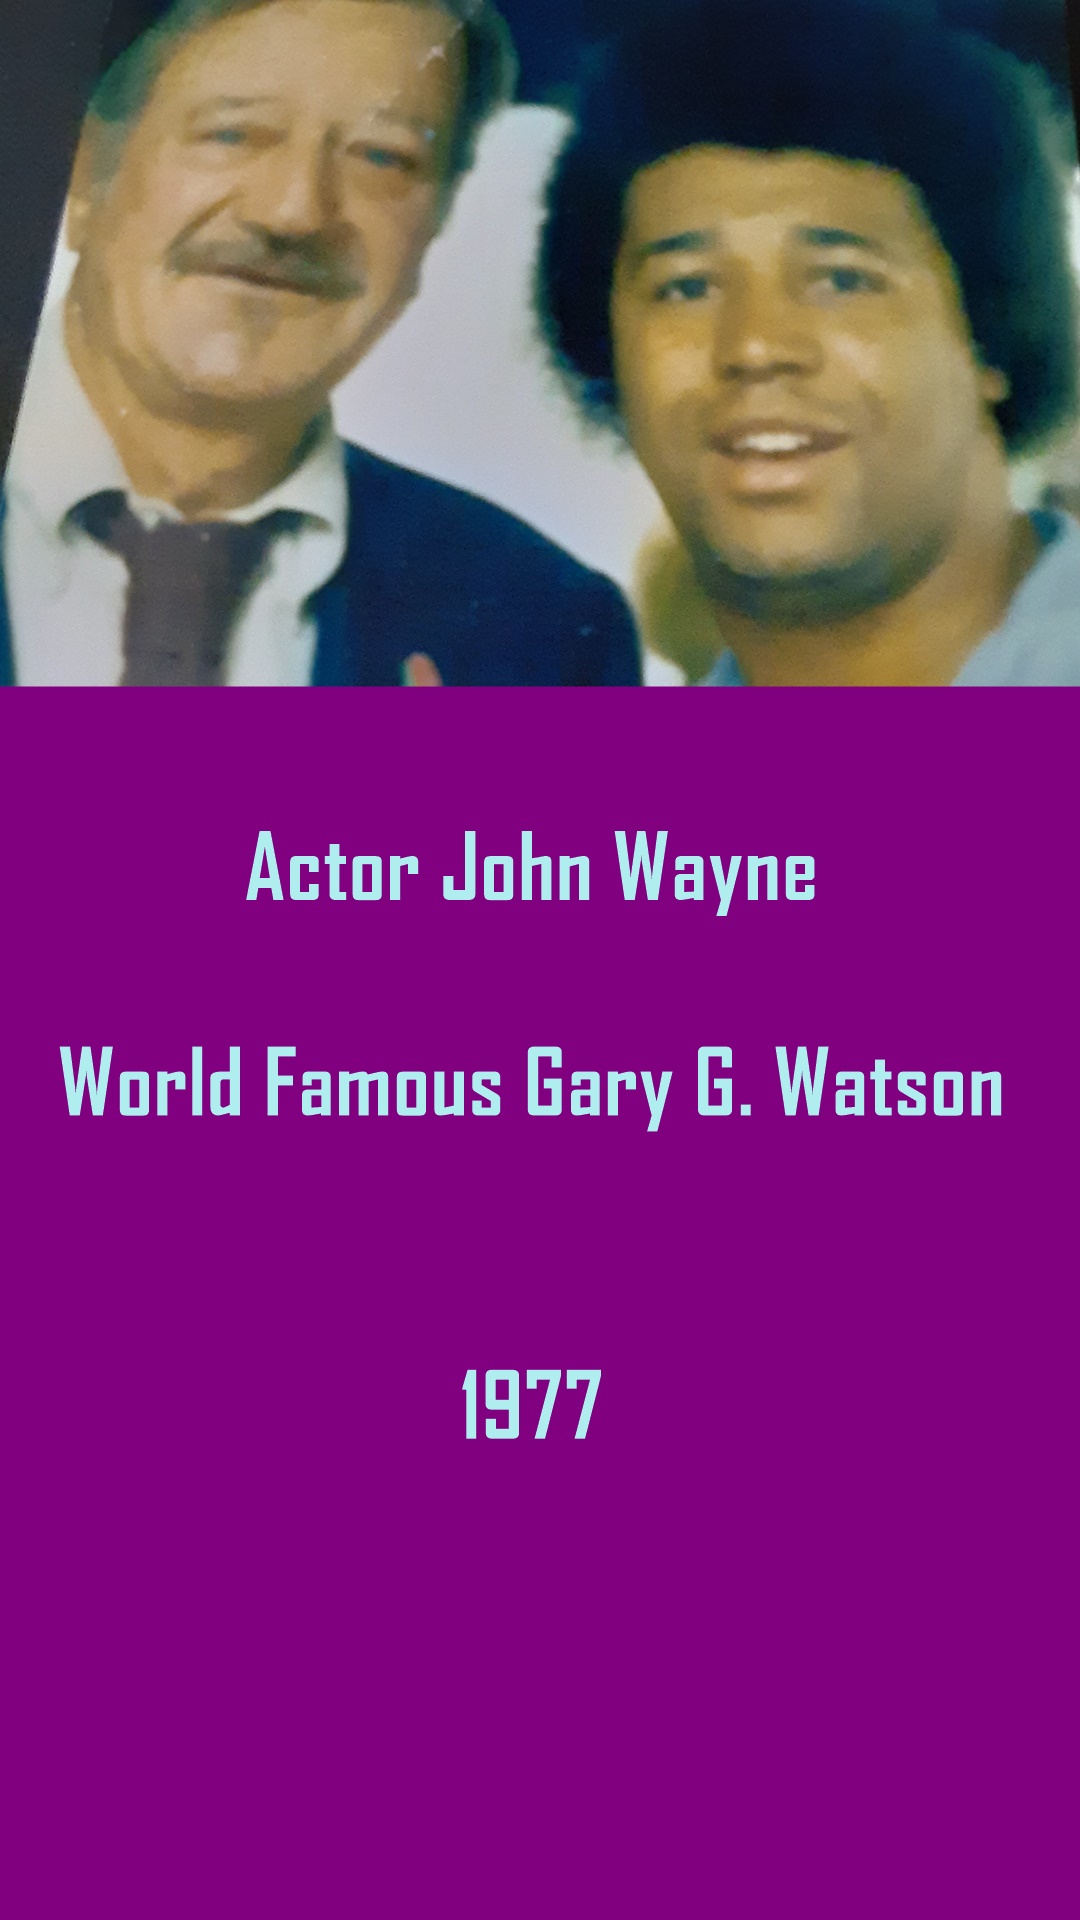 John Wayne WFGGW